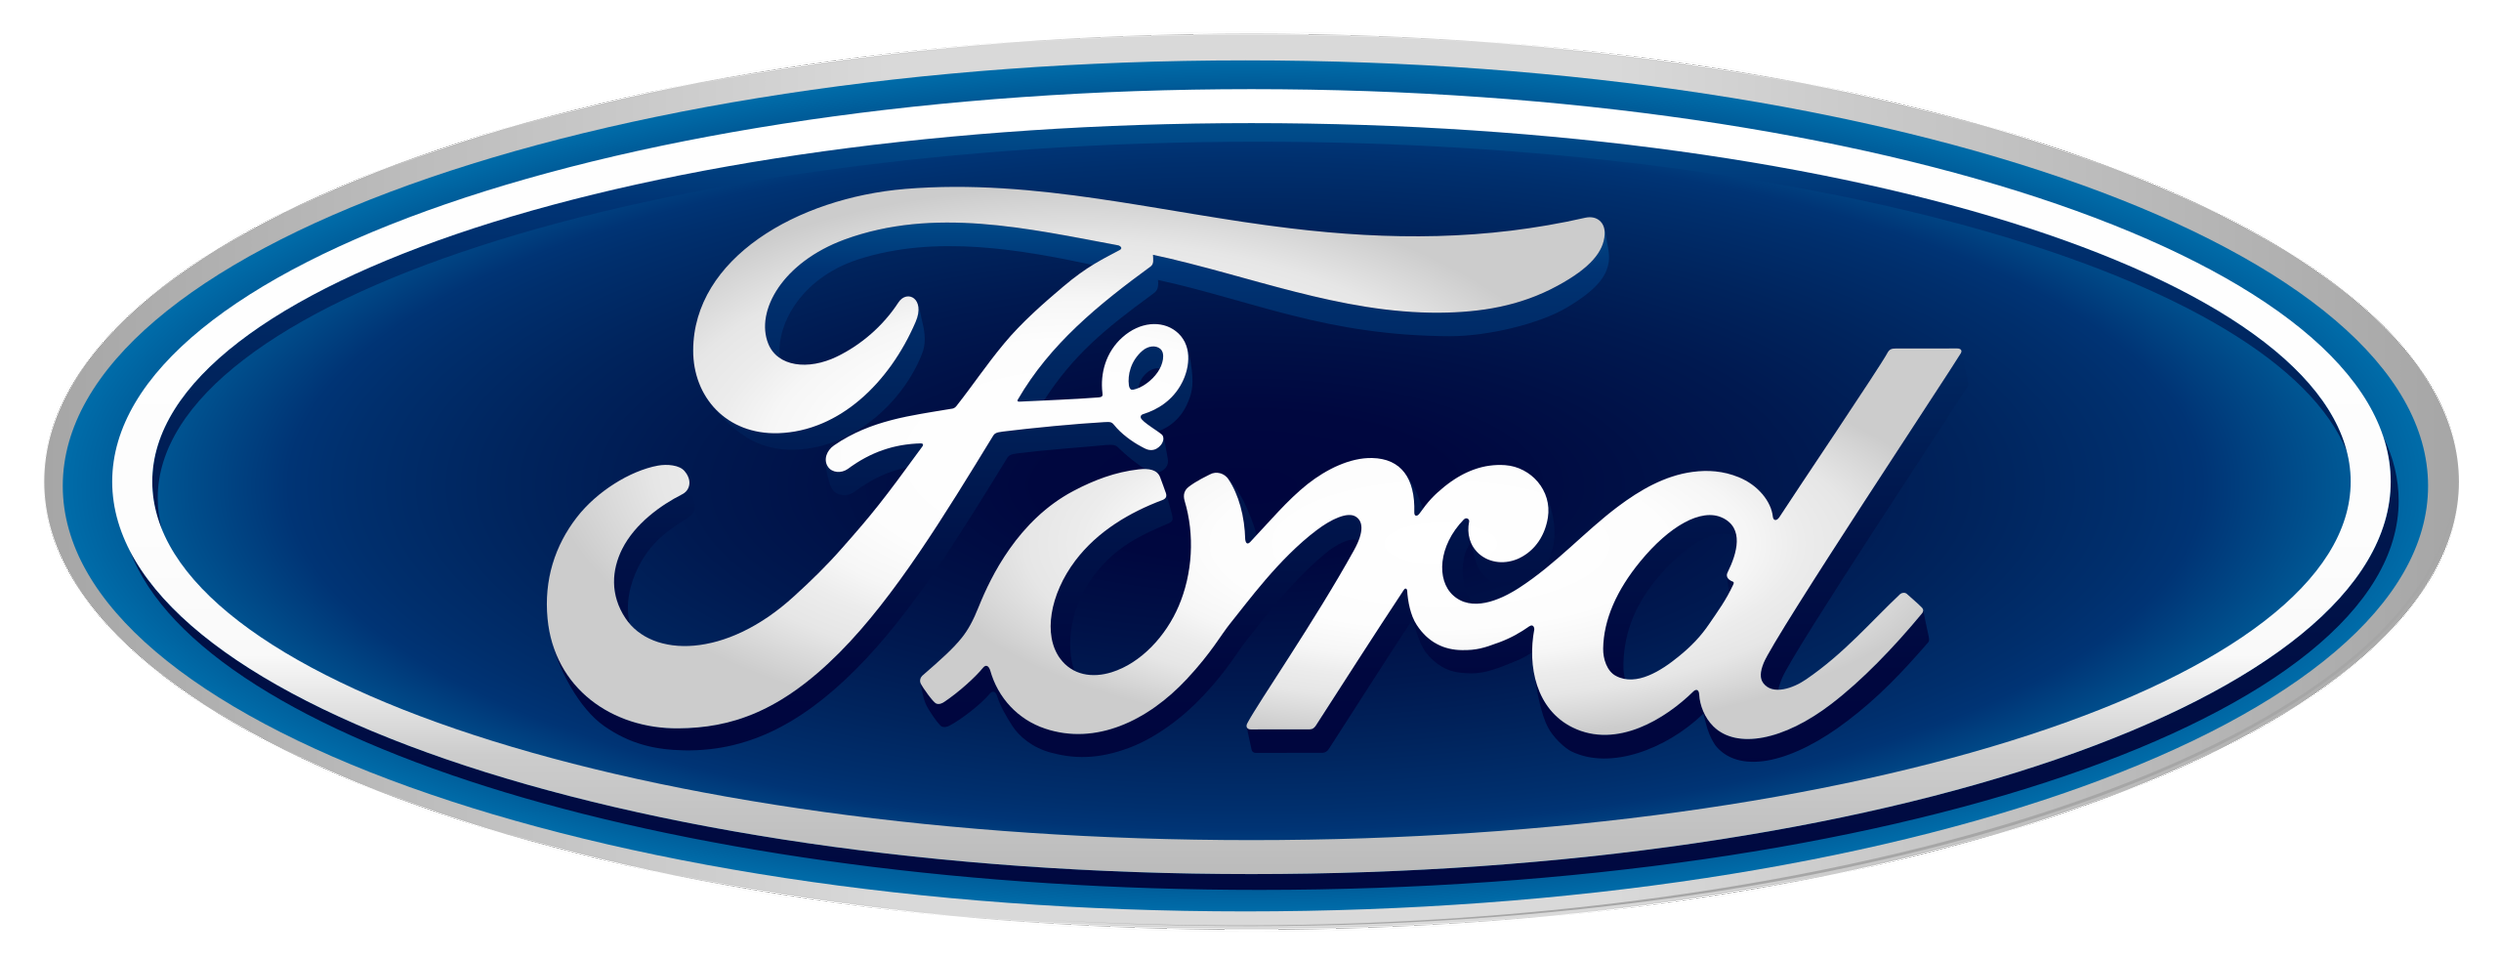 Ford_logo.svg.png